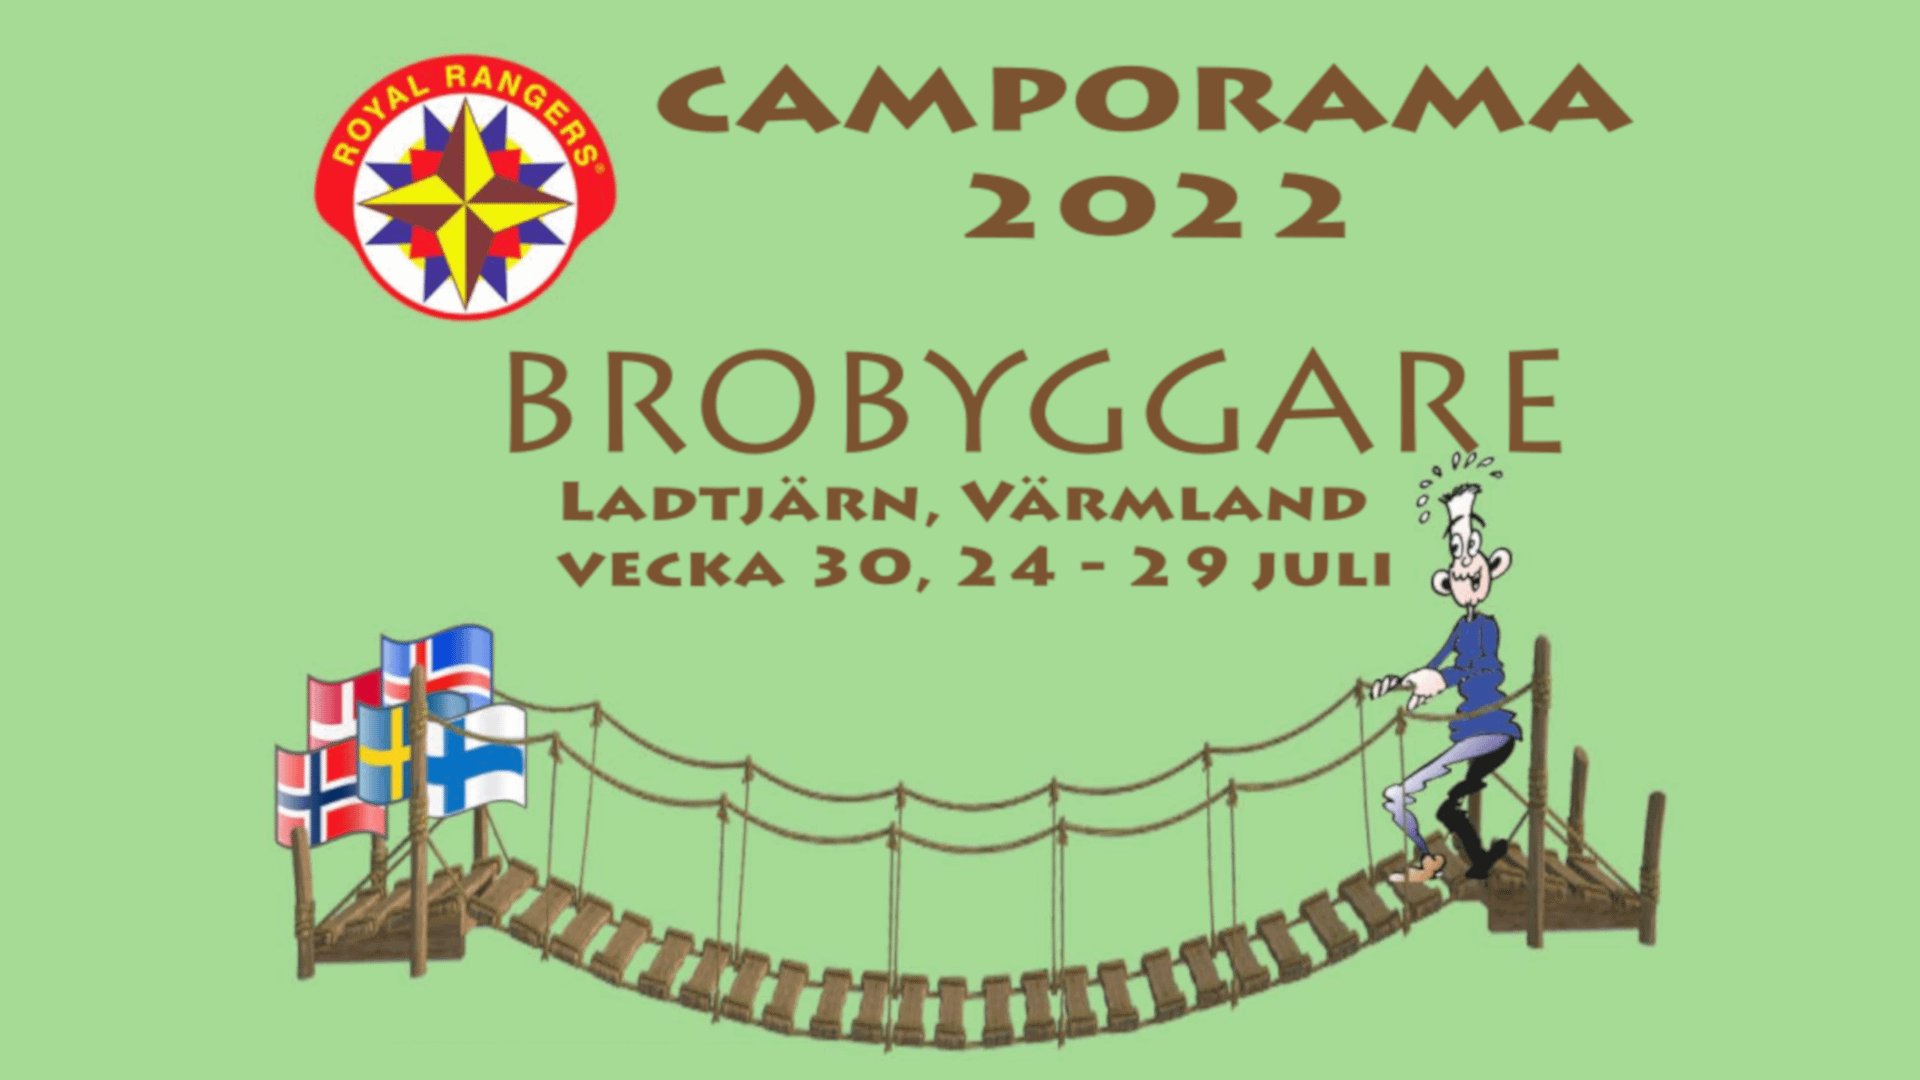 Camporama 2022